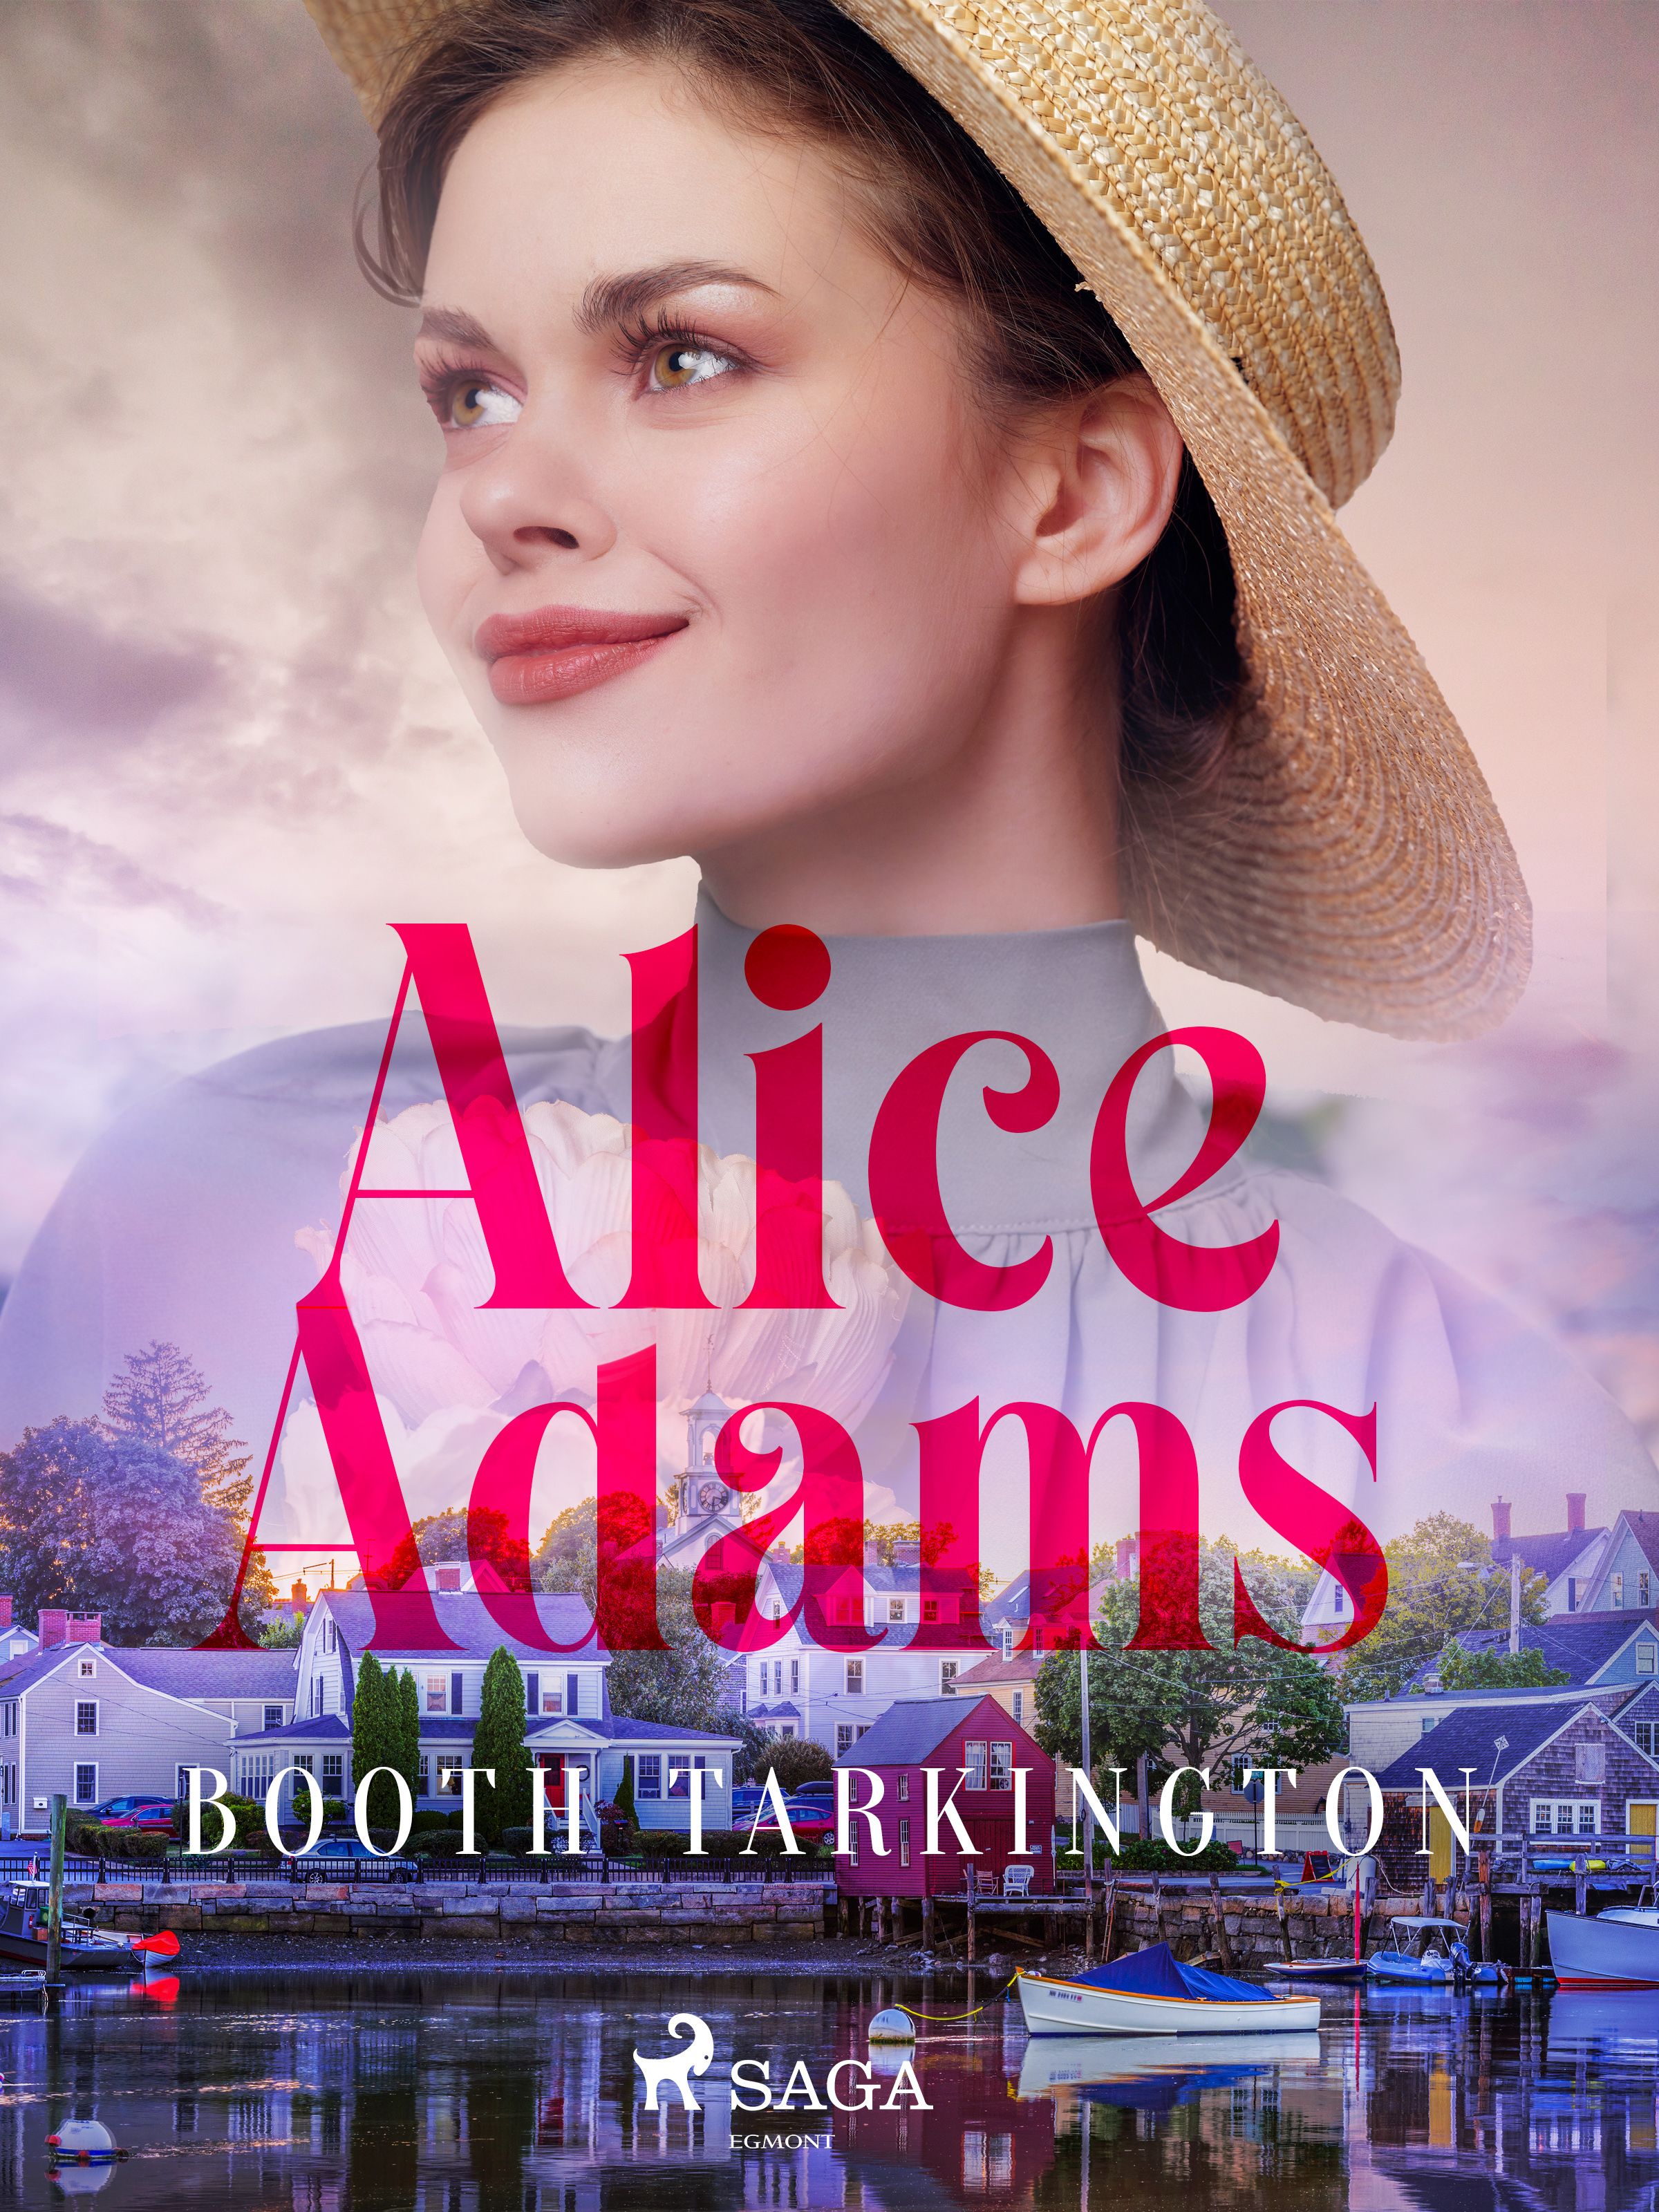 Alice Adams, e-bog af Booth Tarkington